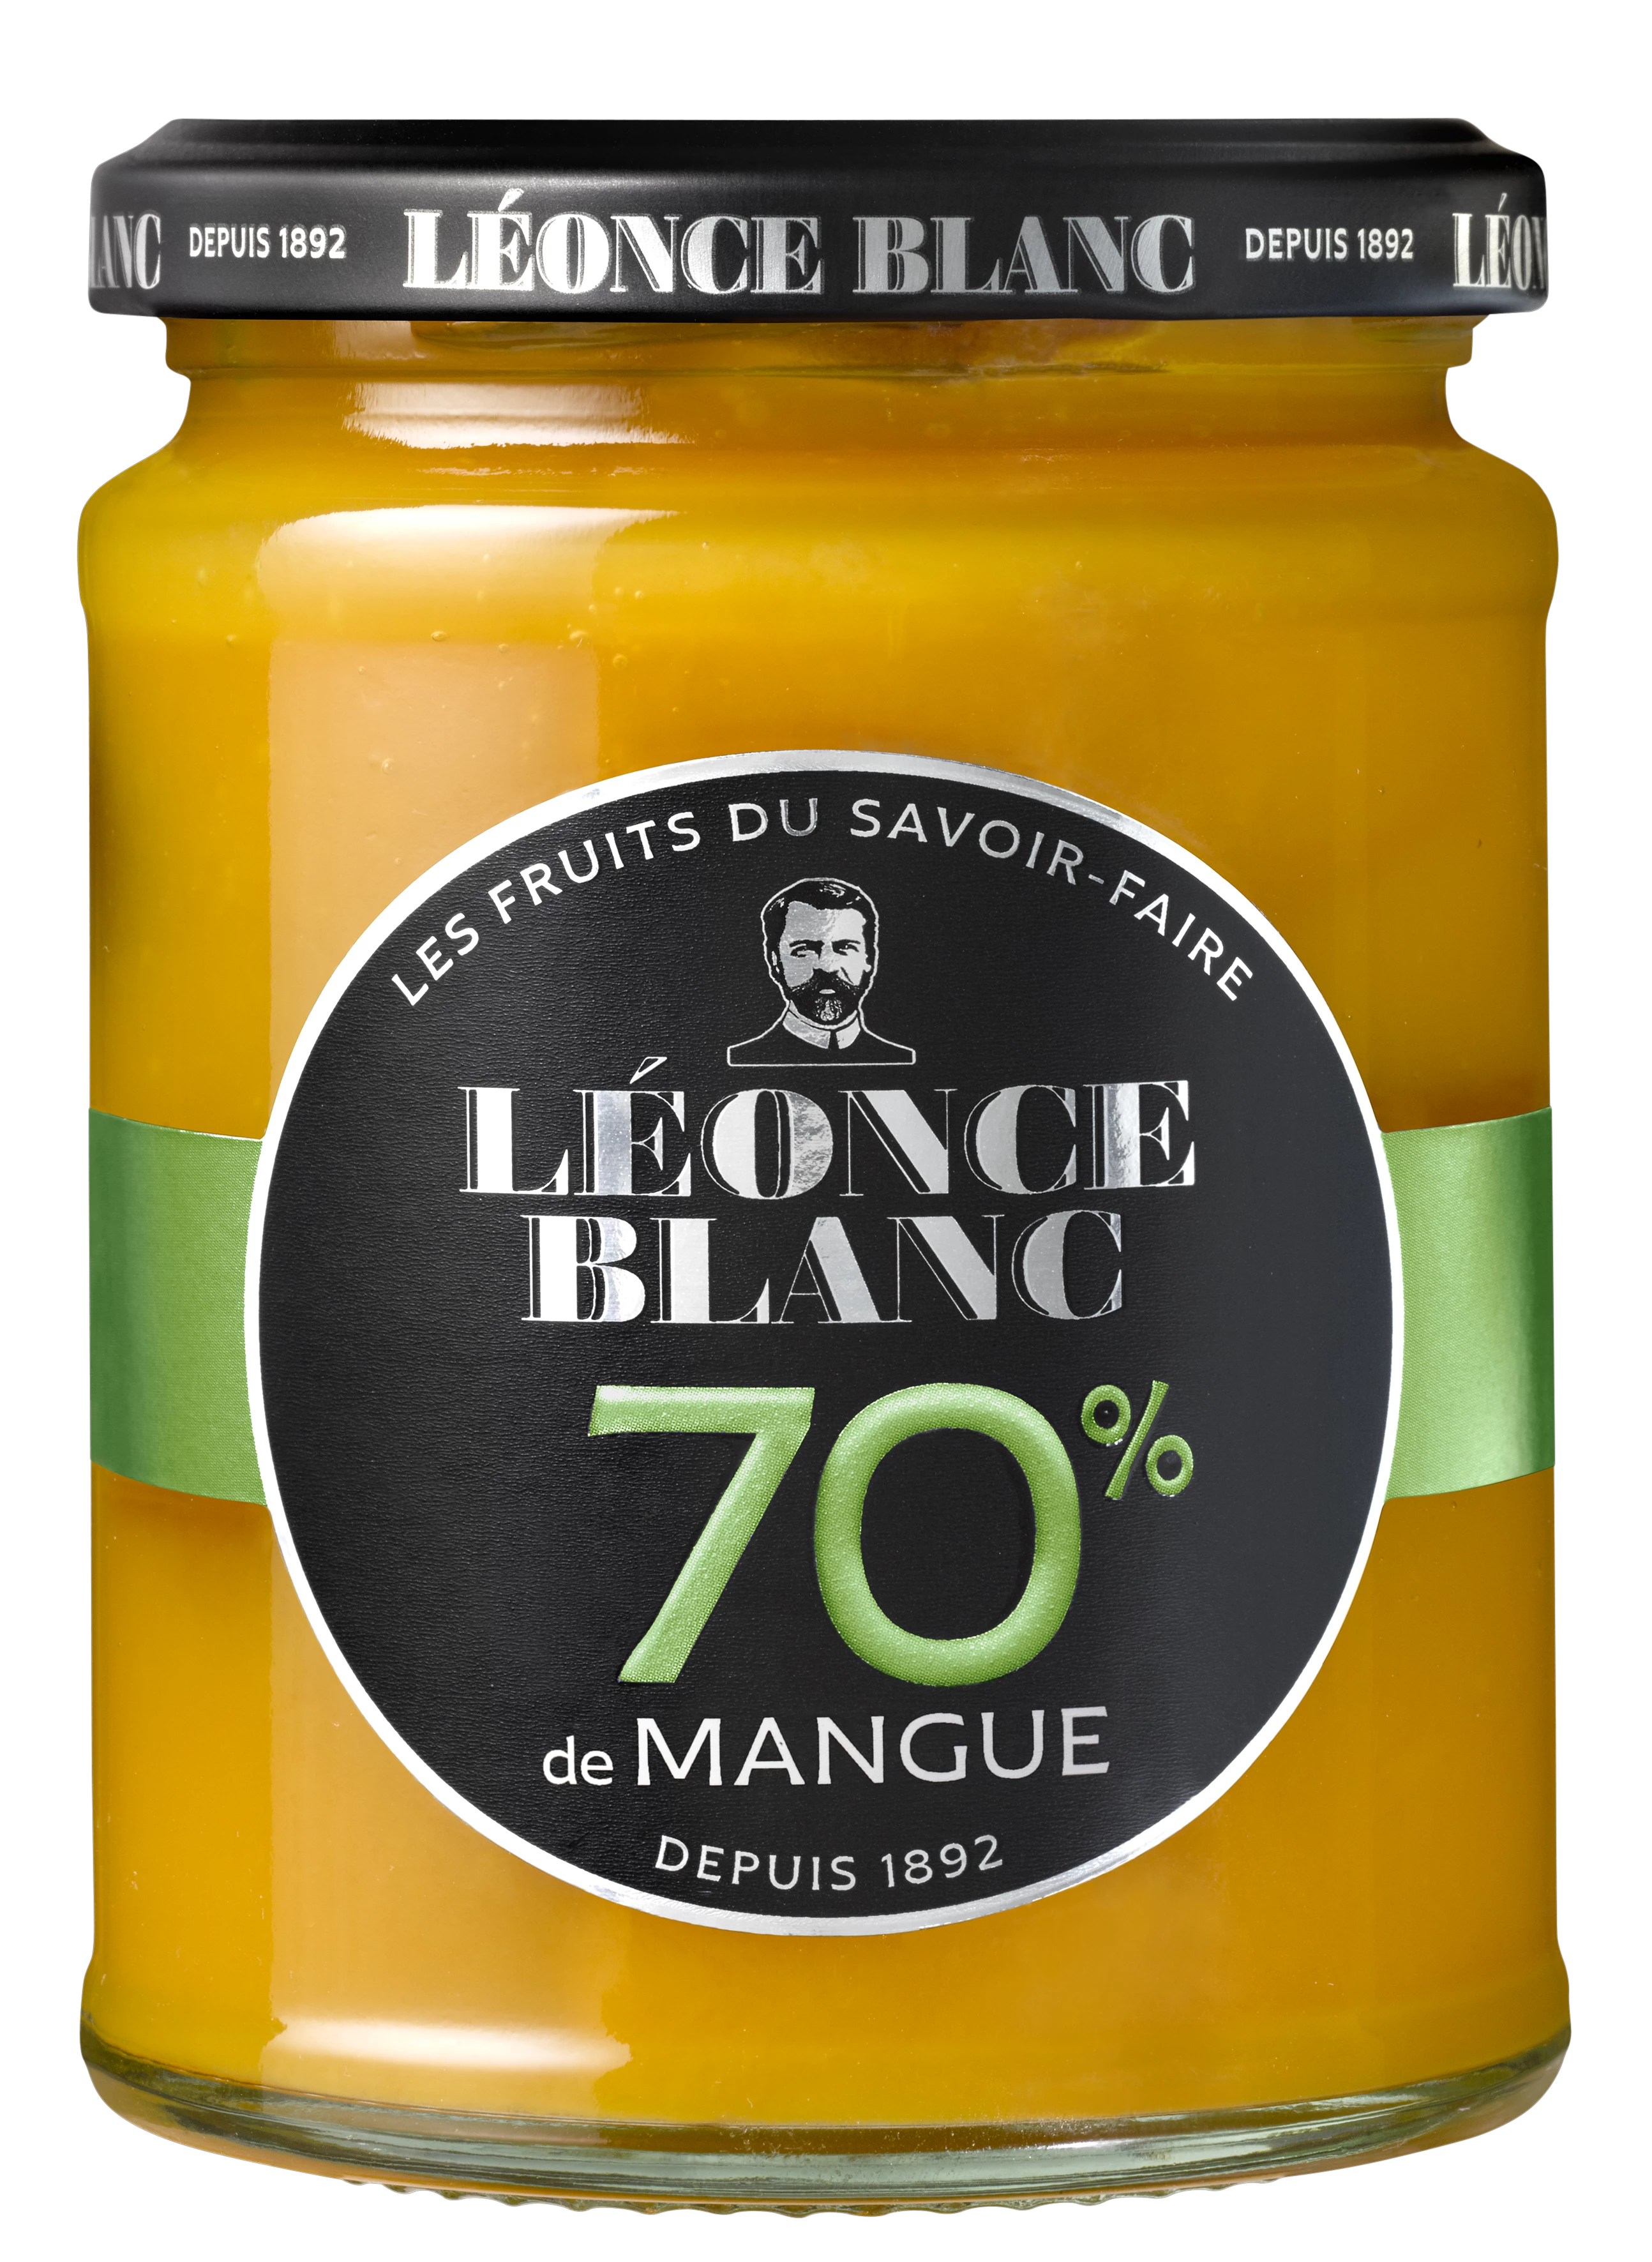 Mangue Conf. 70 Leon Blc 320g